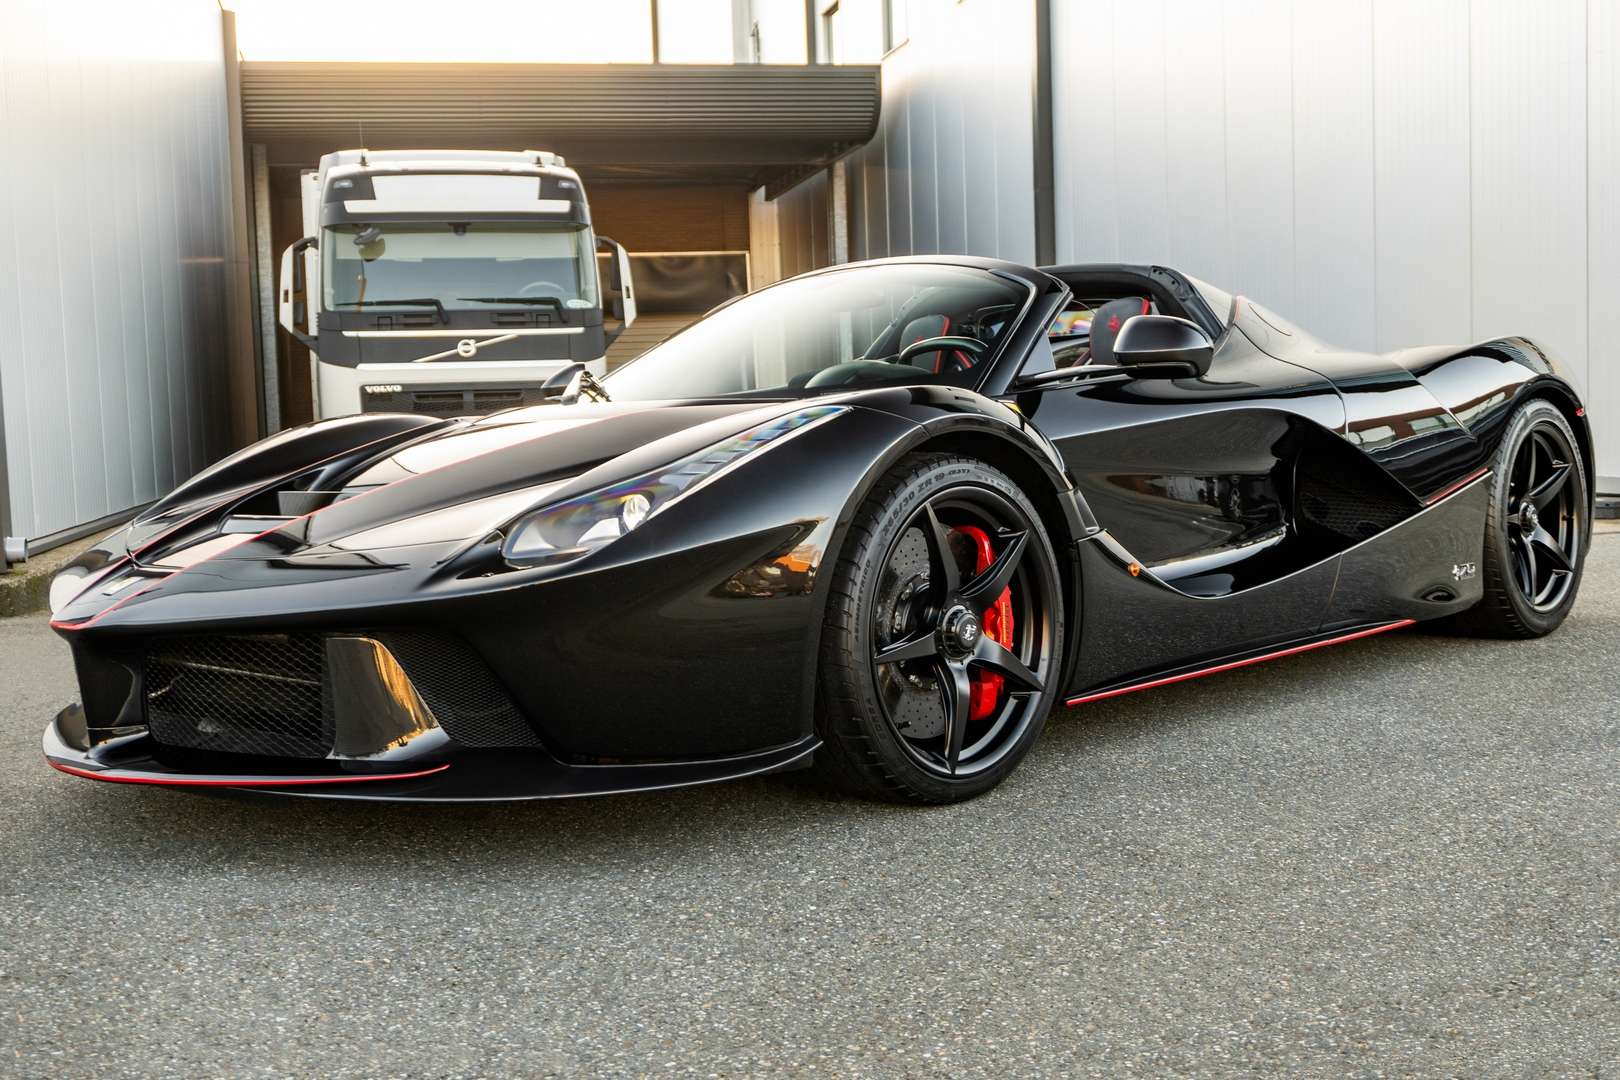 Ferrari LaFerrari Convertible in Black used in WOERDEN for € 6,299,950.-